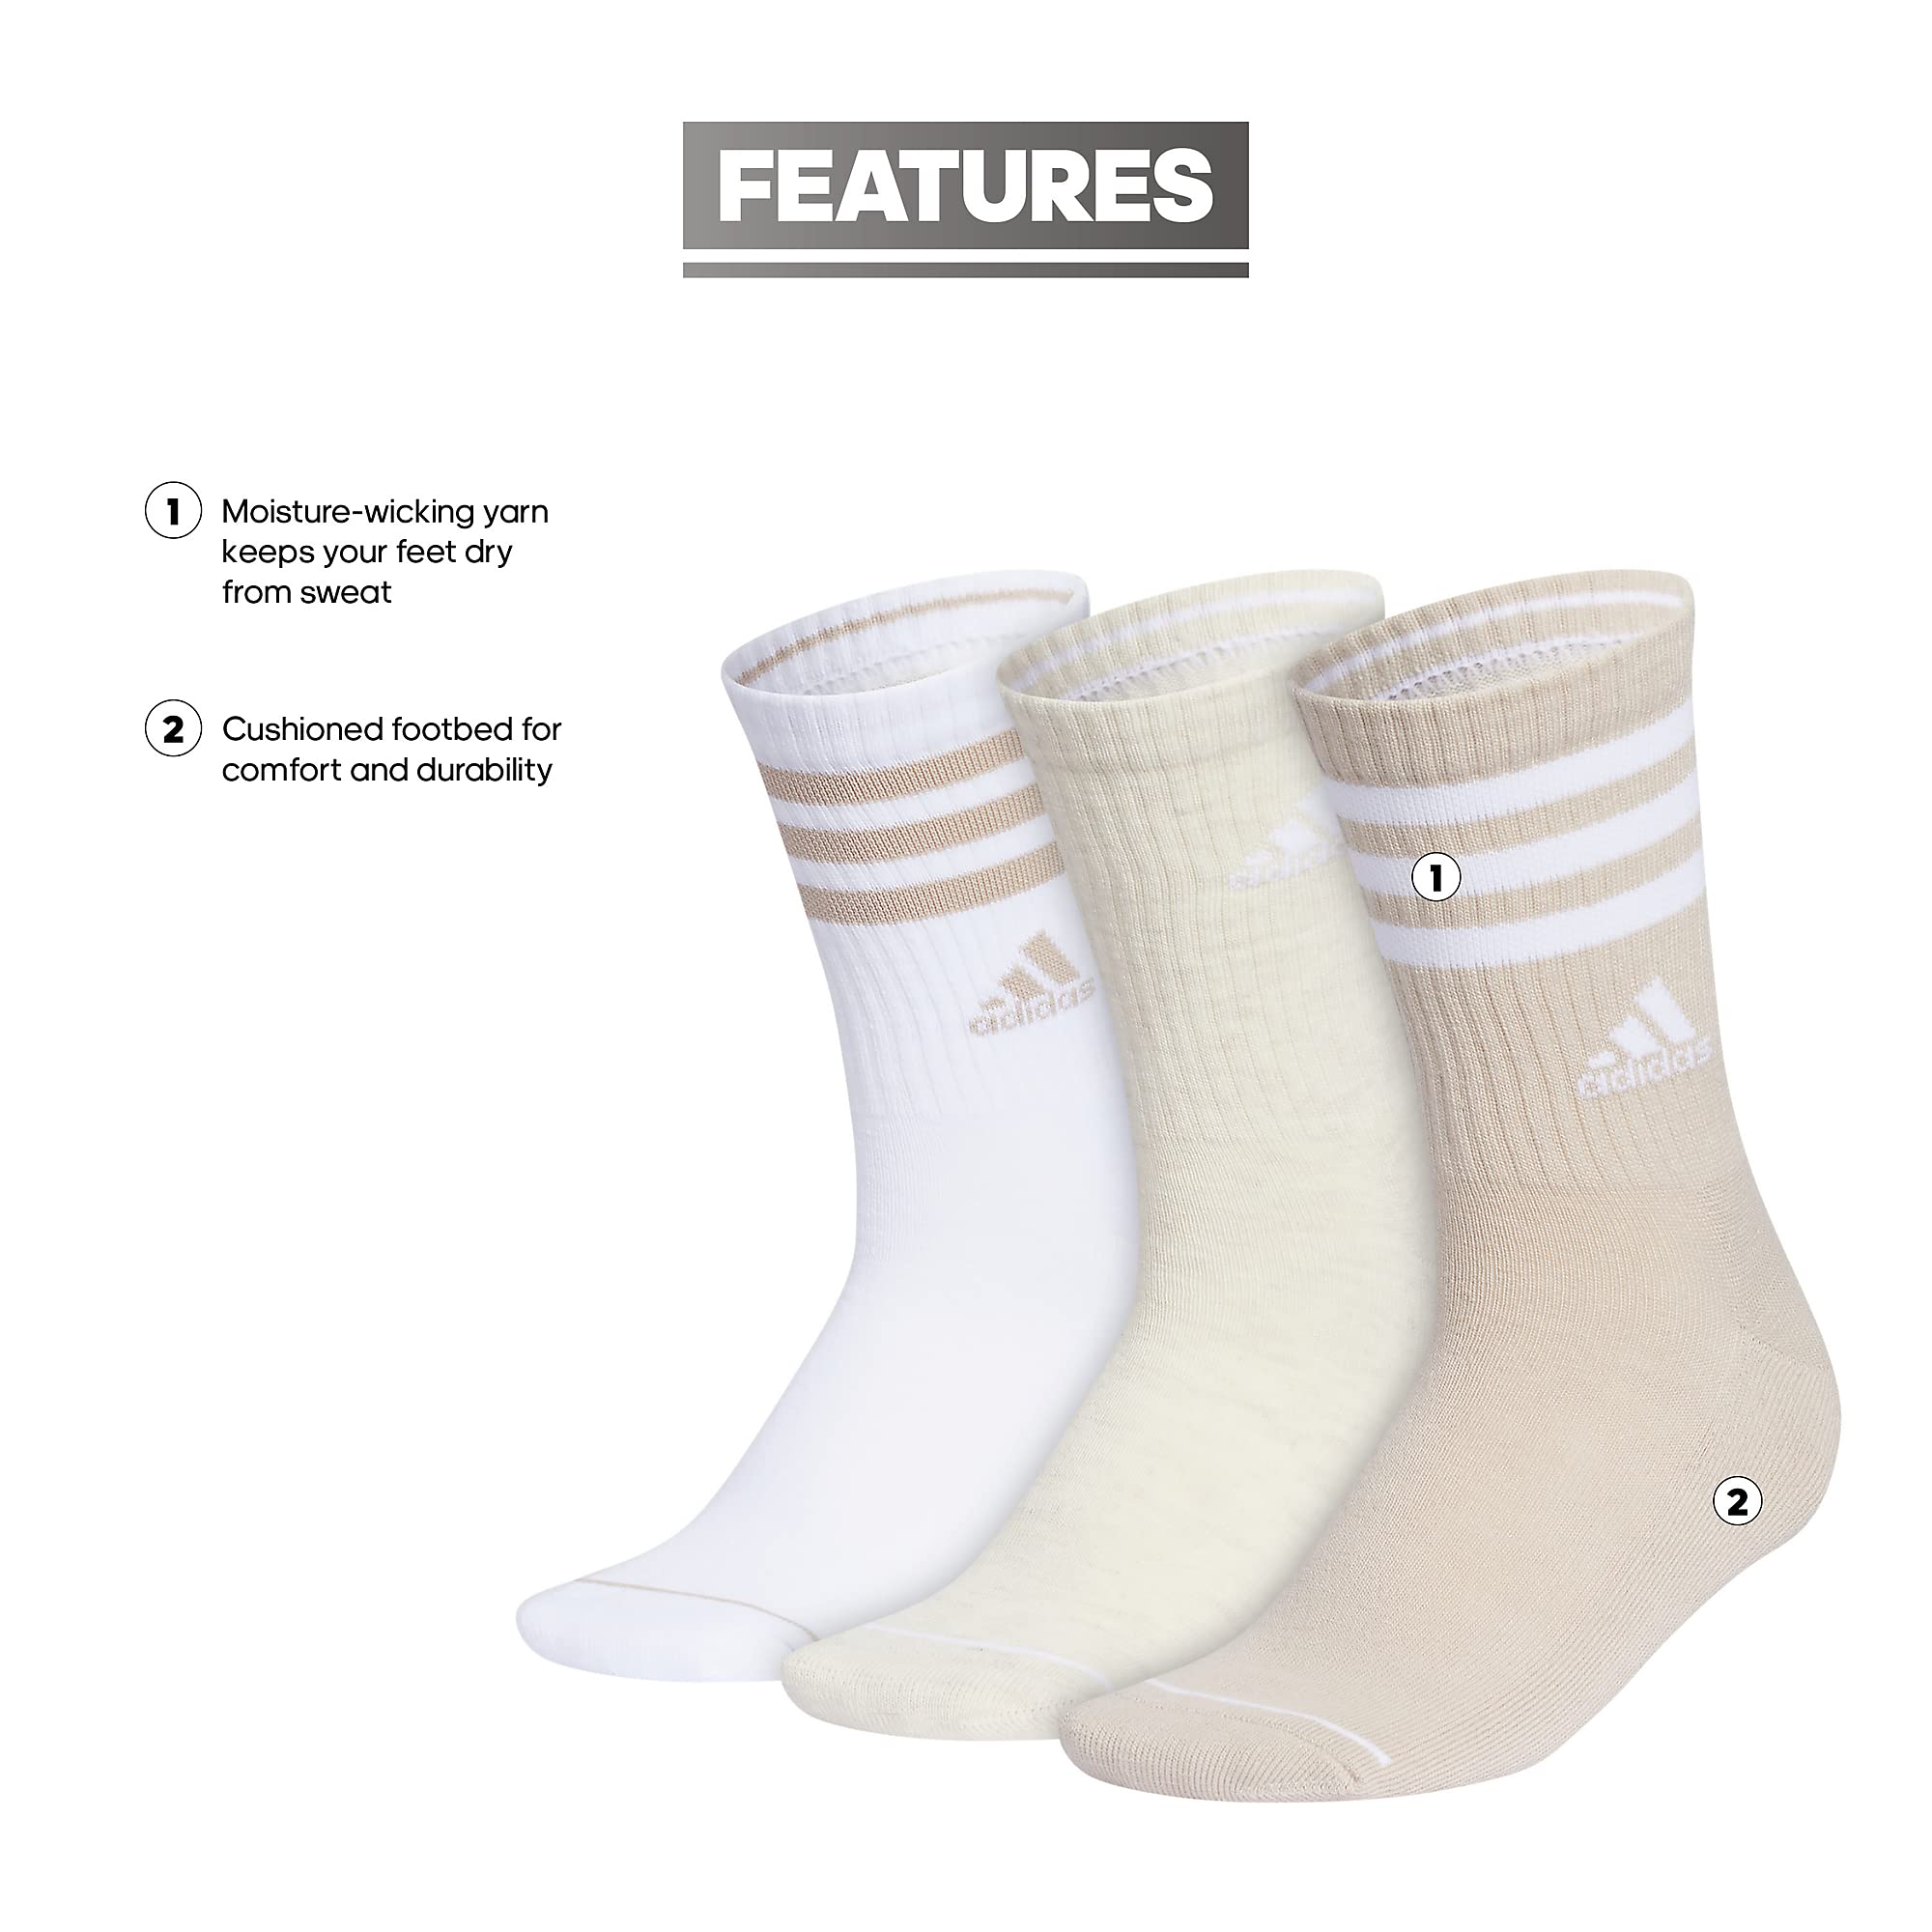 adidas Women's 3-Stripe Crew Socks (3-Pair) with Arch Compression